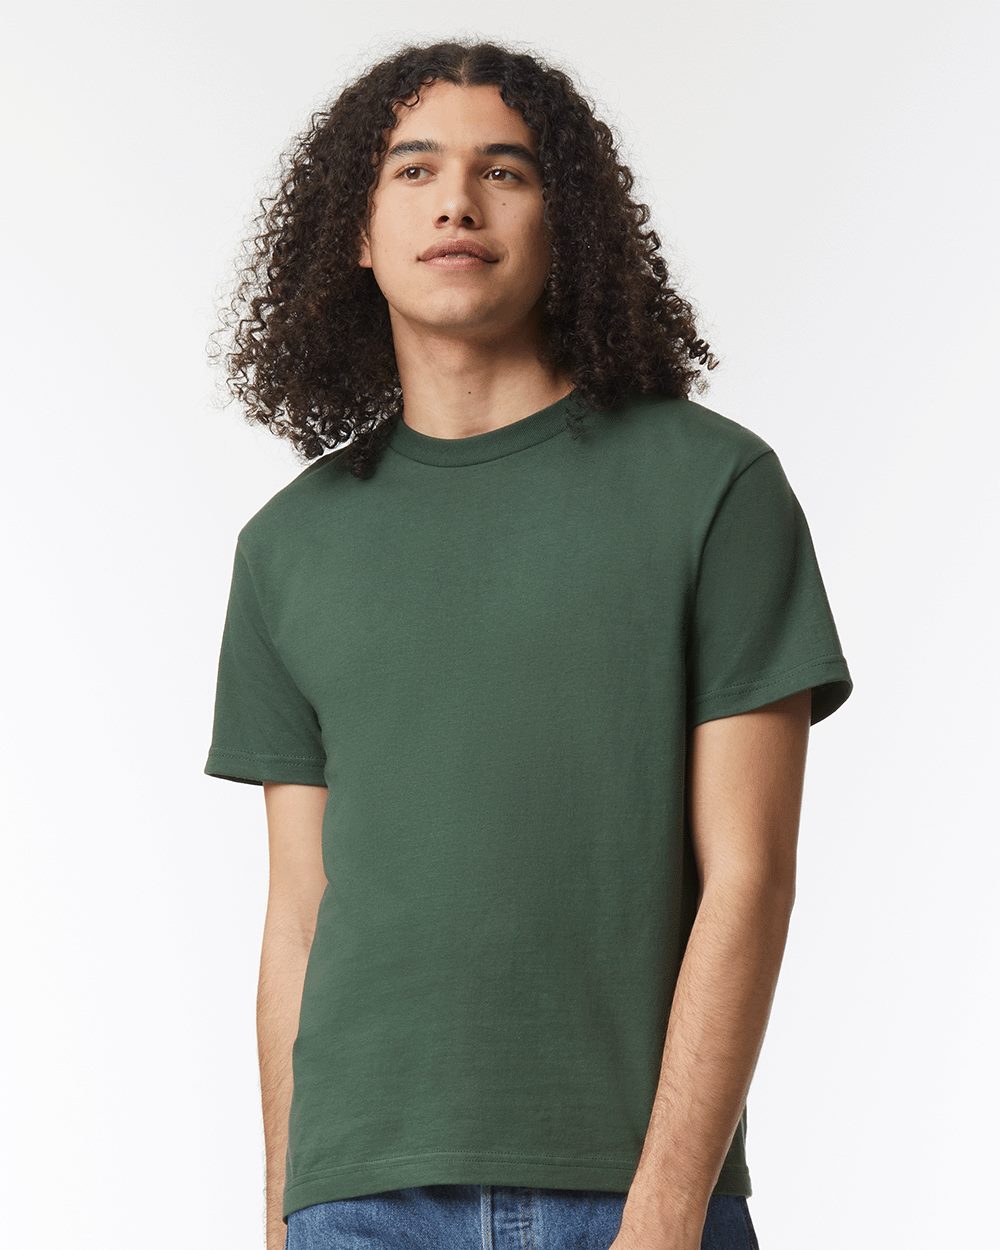 American Apparel Men's Heavy Jersey Weight Box Short Sleeve T-Shirt, Sizes  S-XL